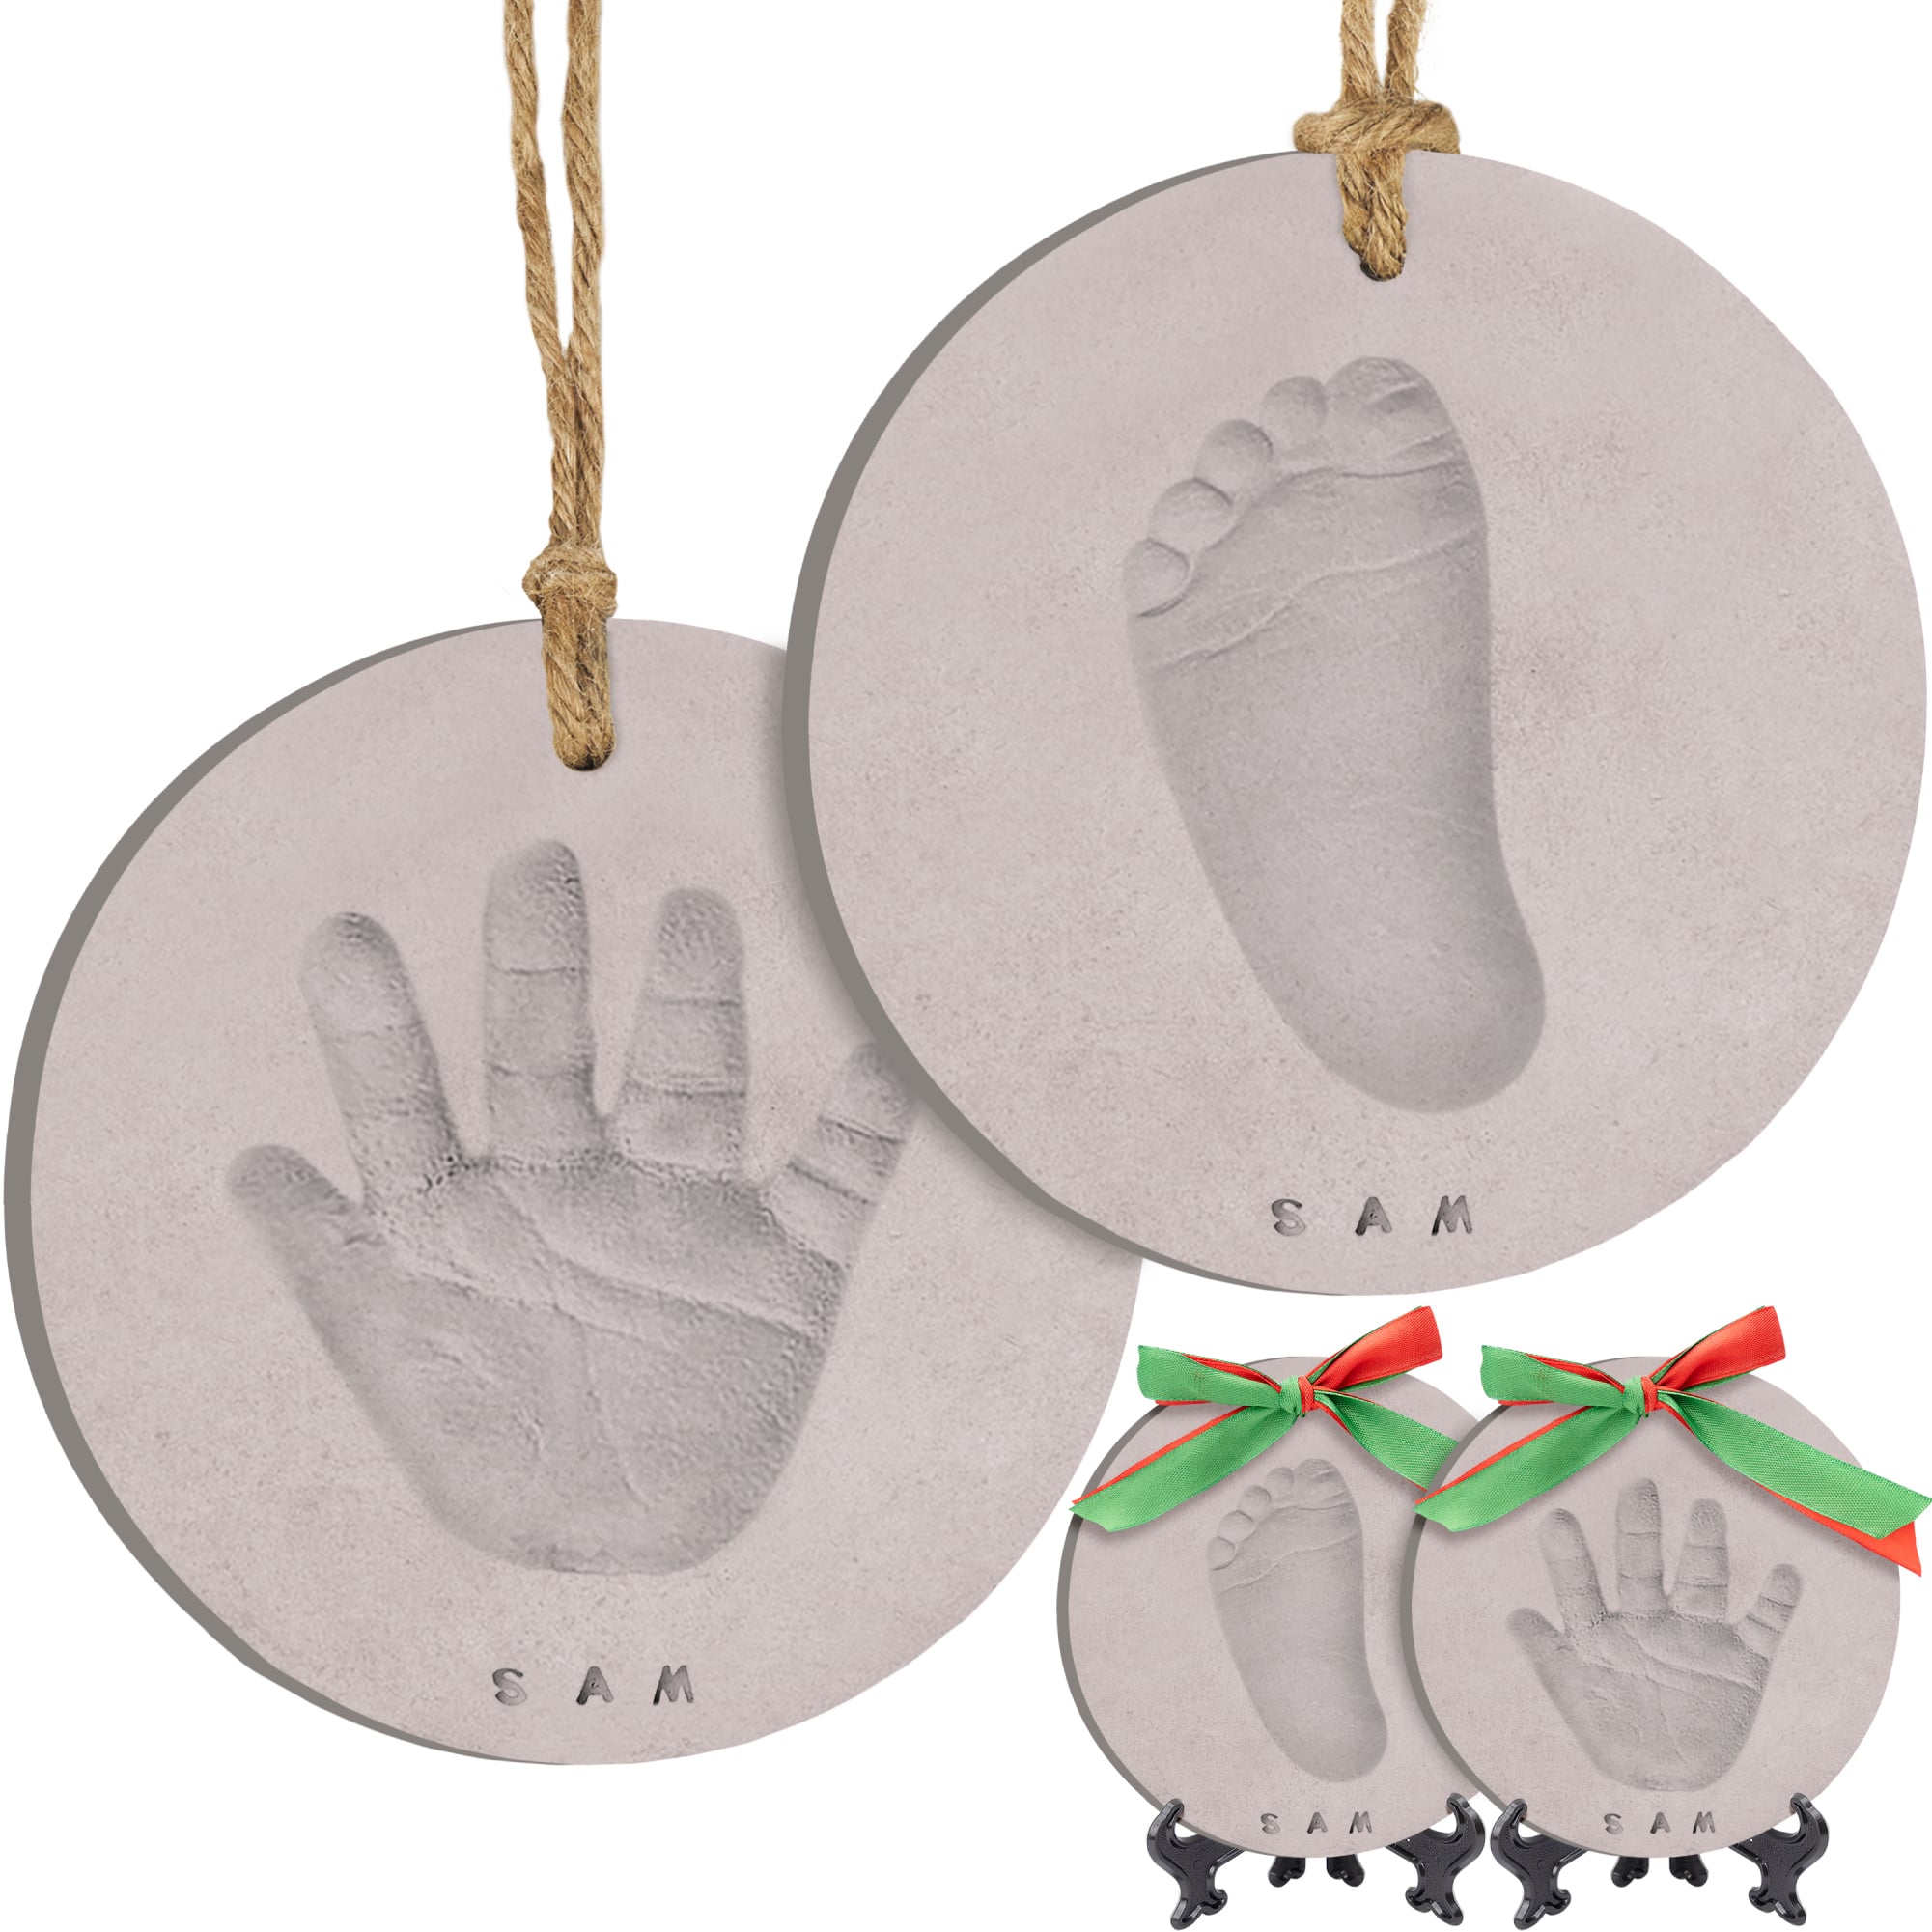 Keepsake Ornament Kit - For Small Hands